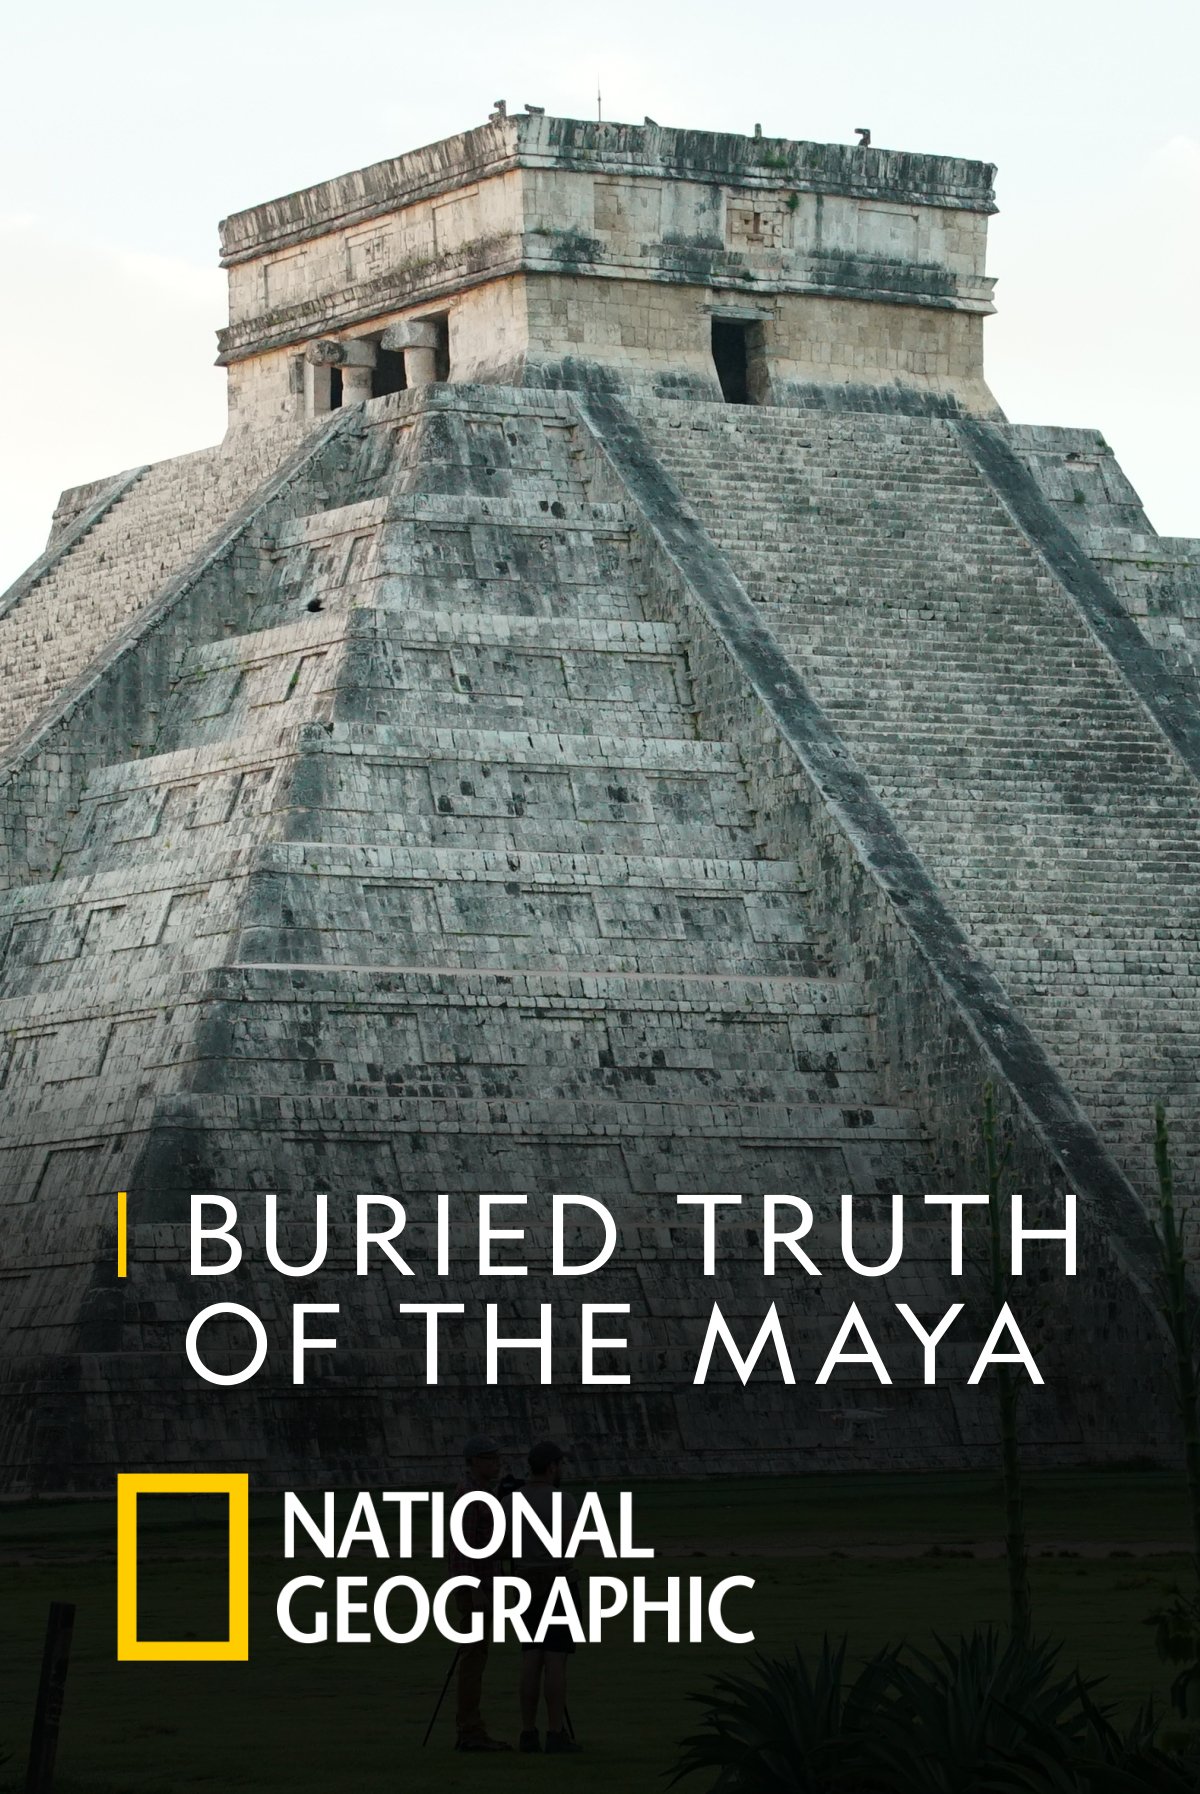 Buried Truth of the Maya